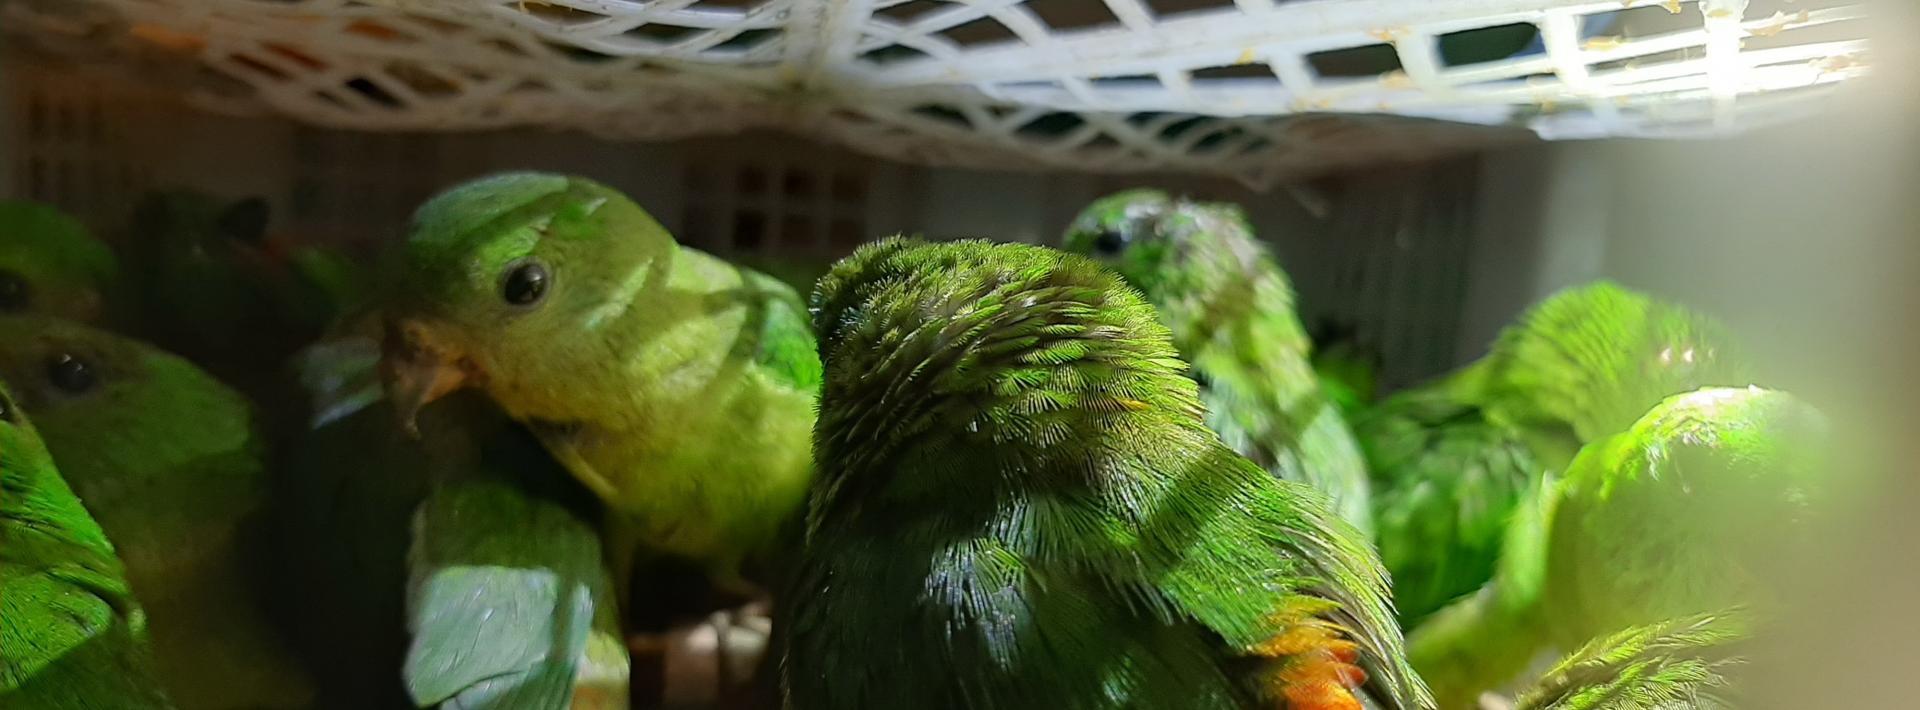 Captured birds in Indonesia